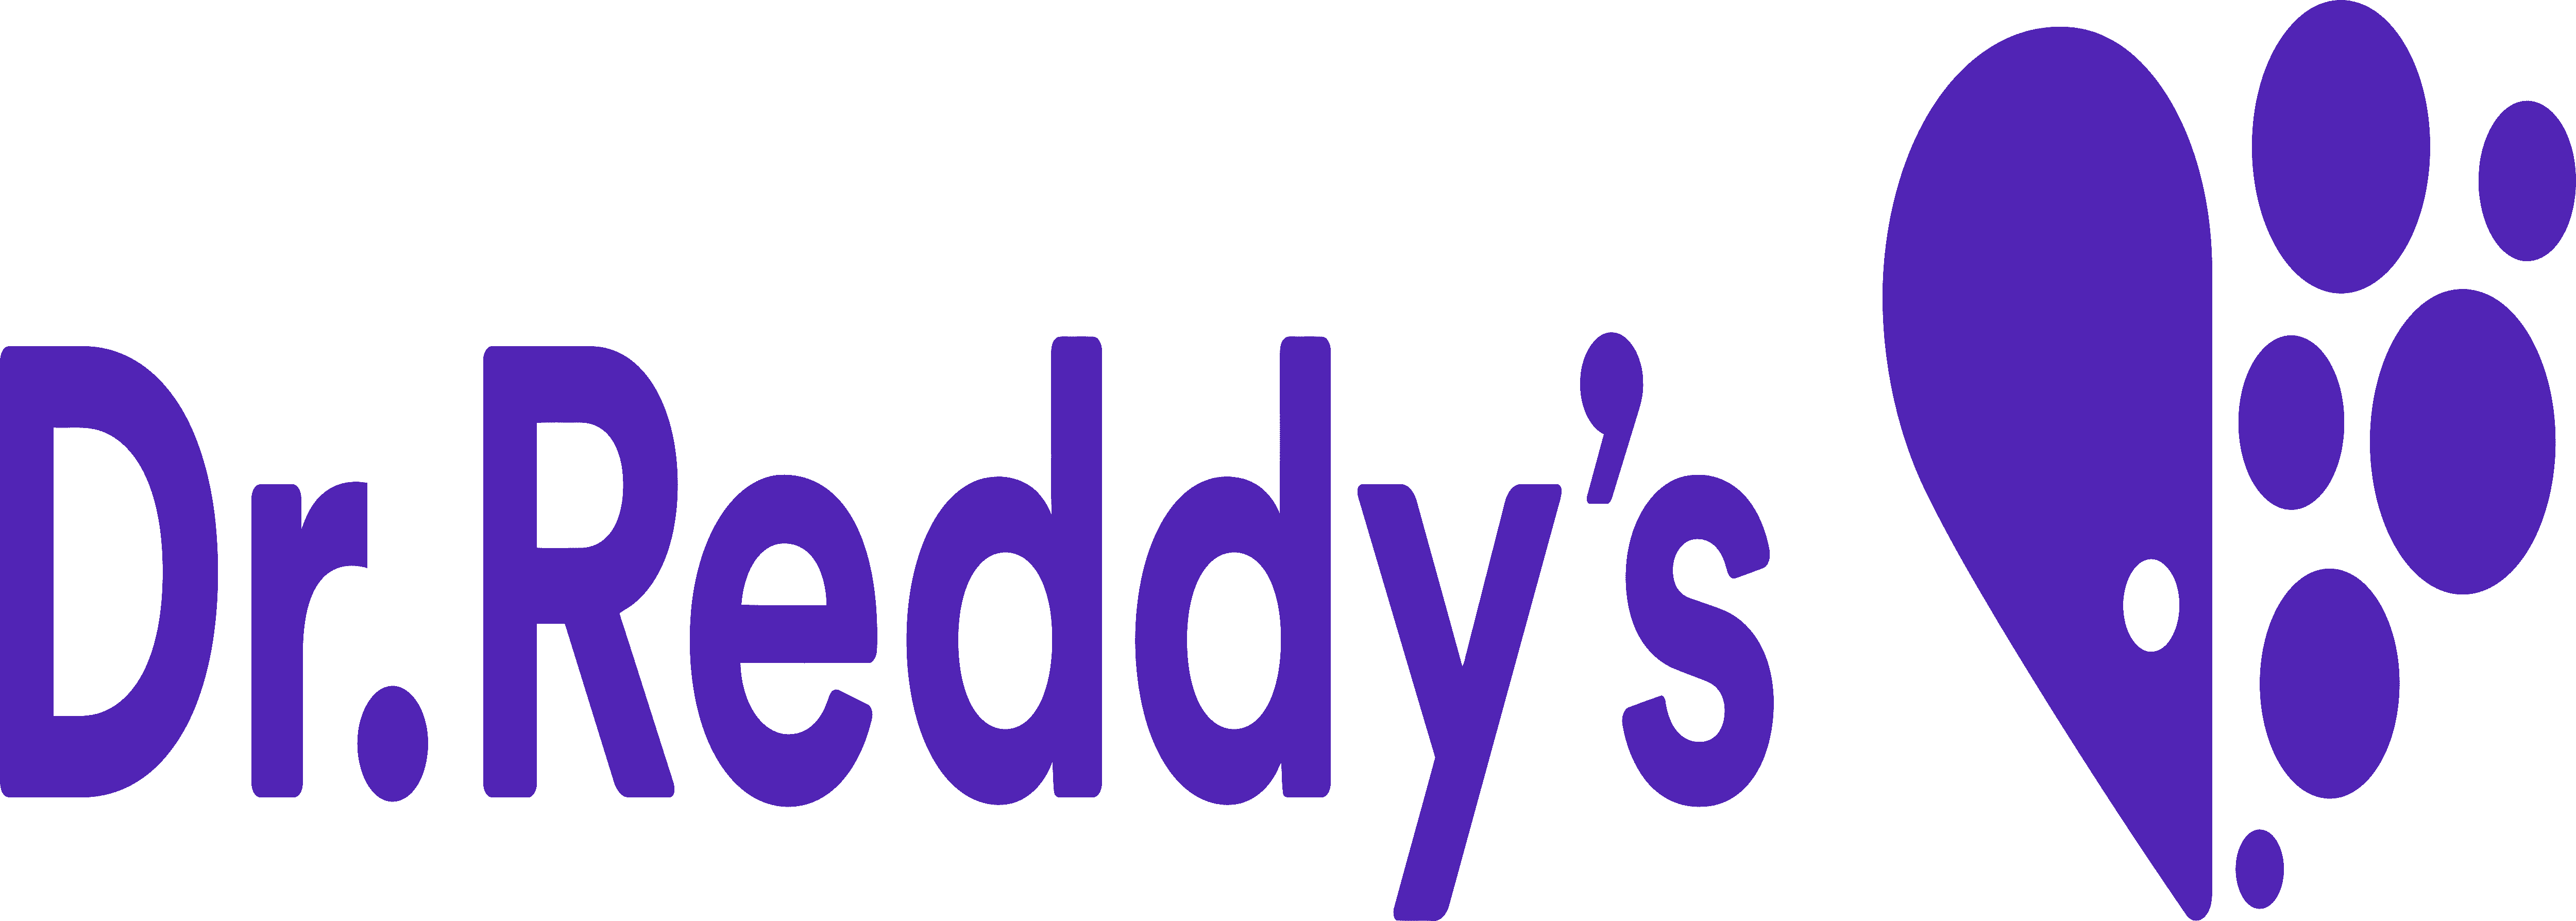 Dr._Reddys_Laboratories_Logo